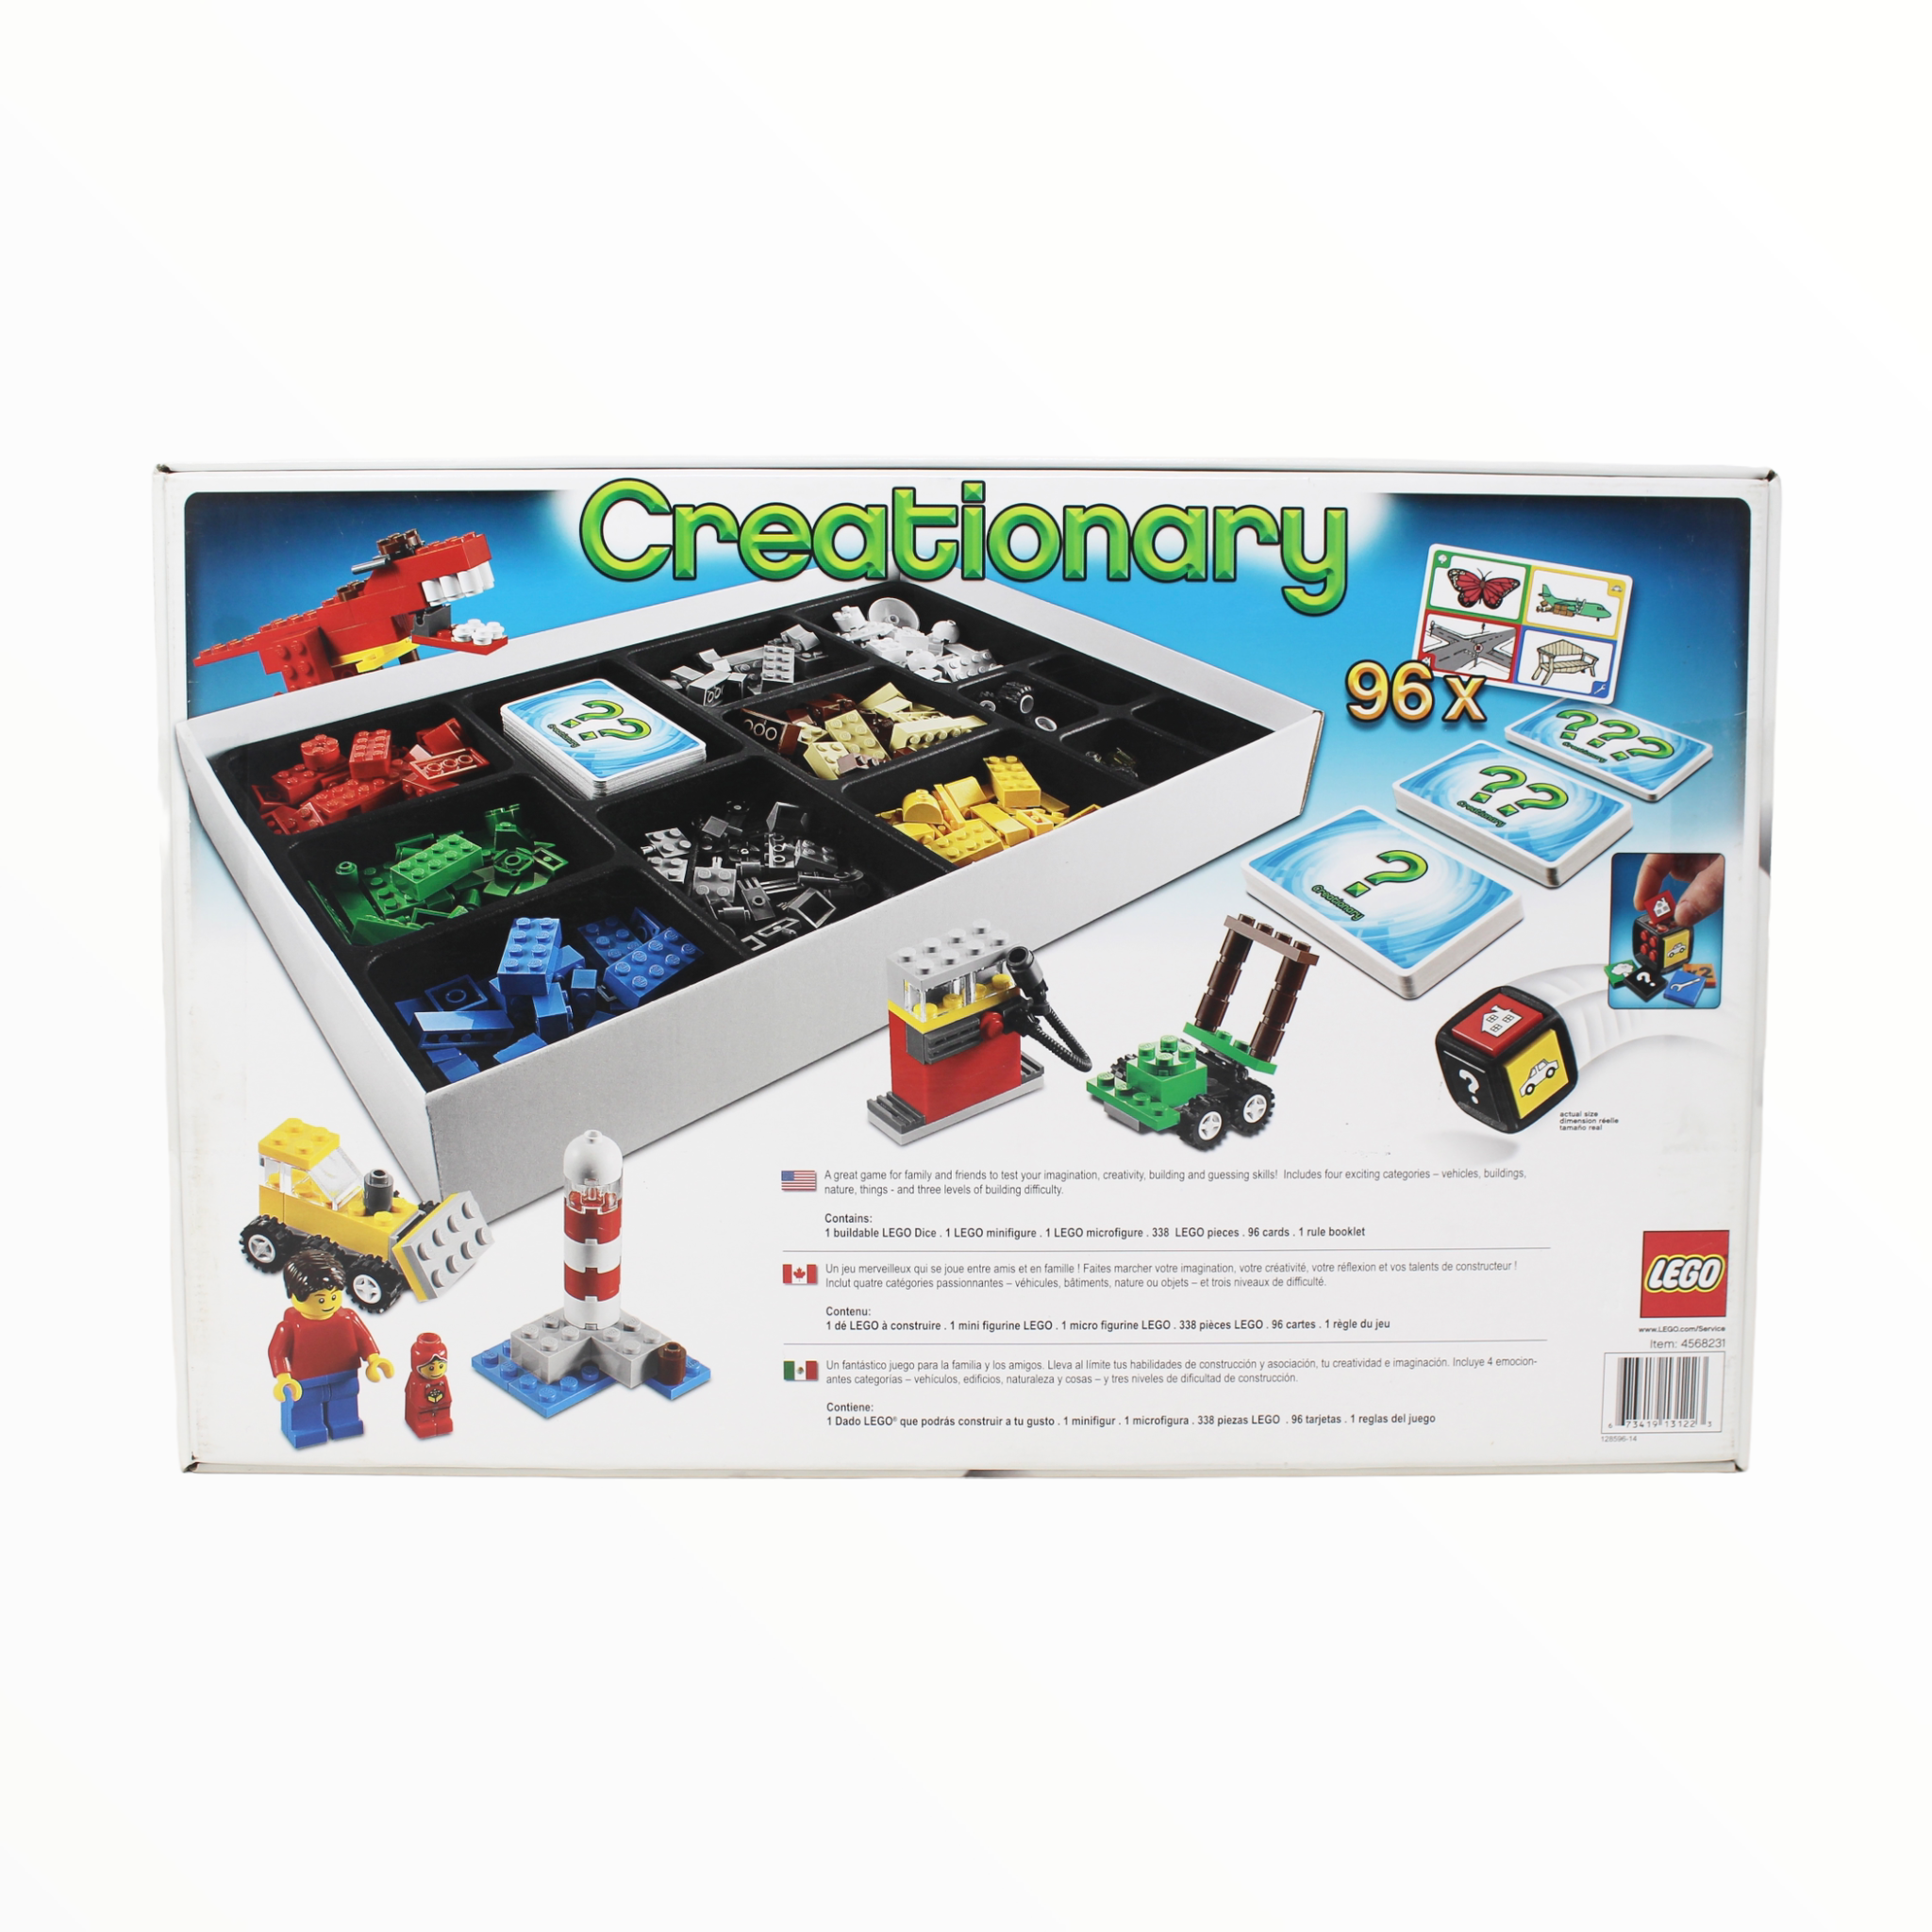 Certified Used Set 3844 LEGO Creationary